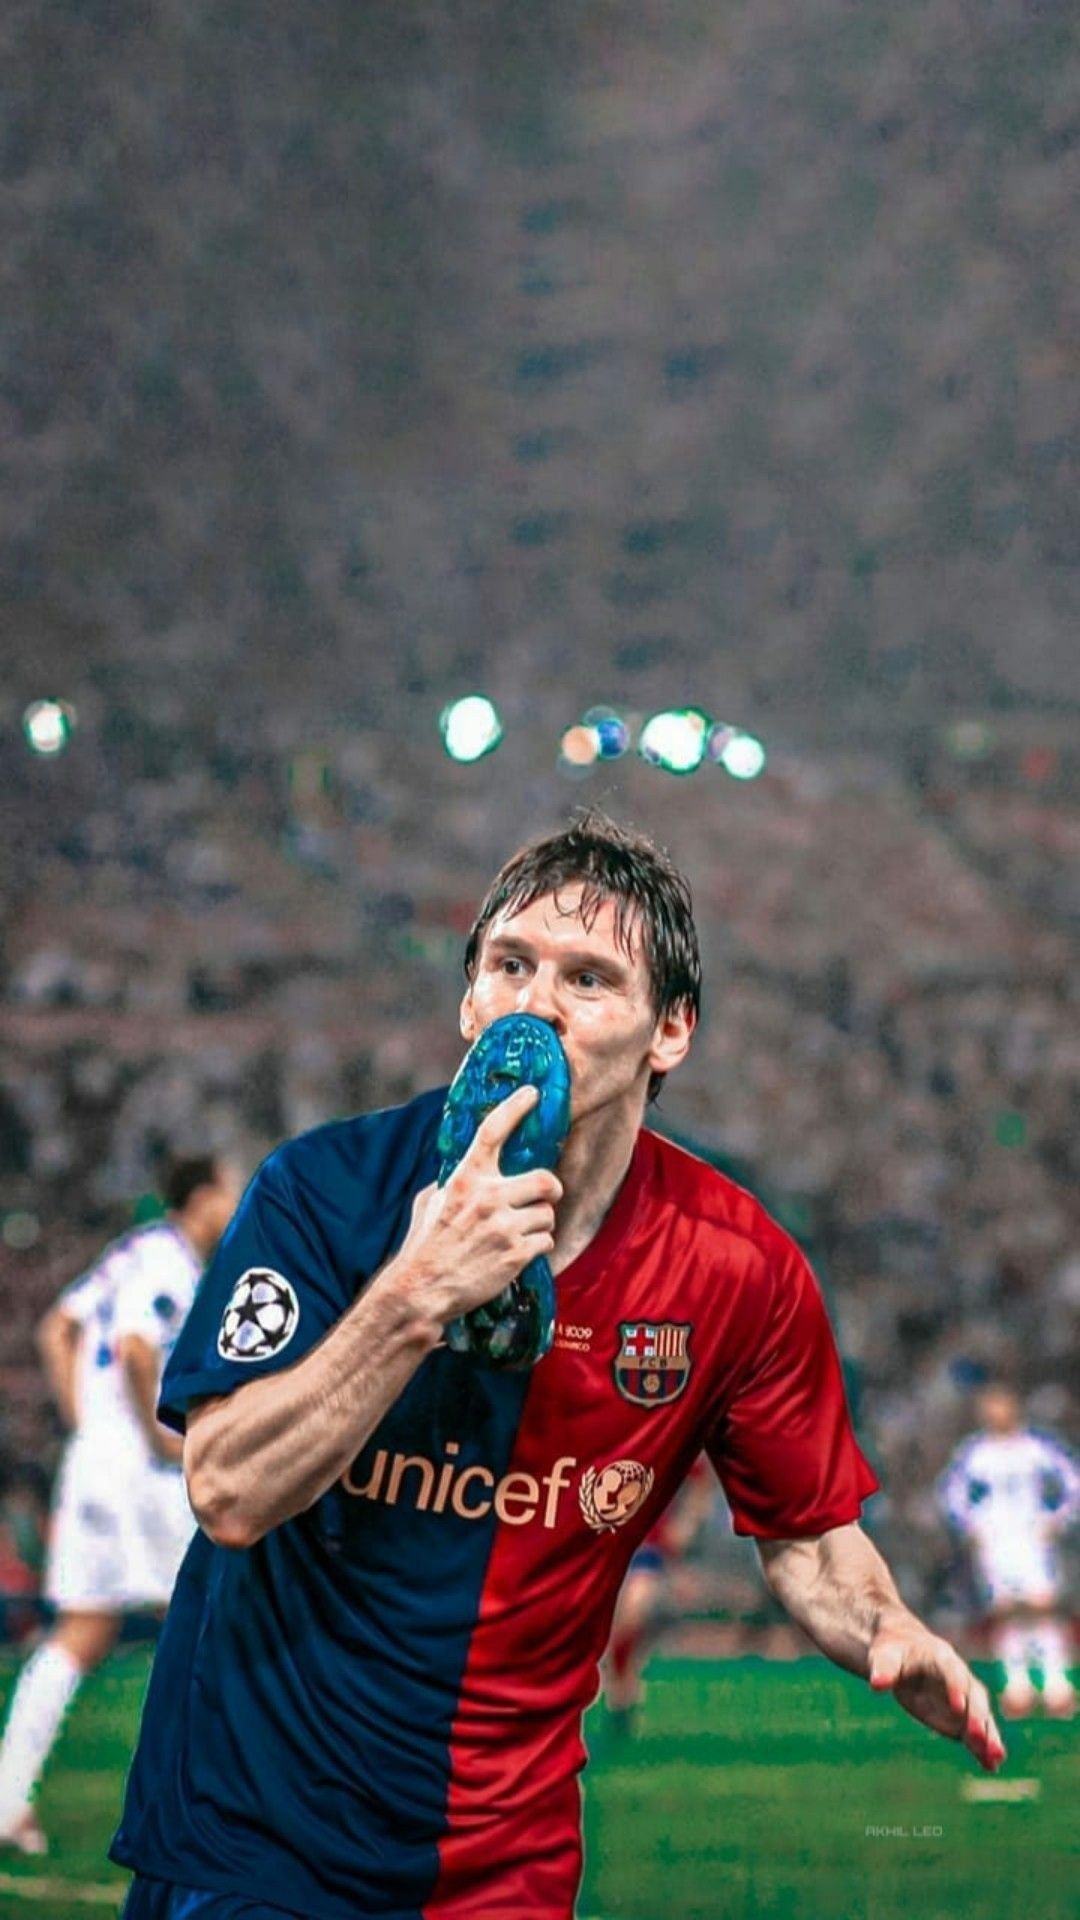  Messi Hintergrundbild 1080x1920. Messi 2009 Wallpaper Free Messi 2009 Background